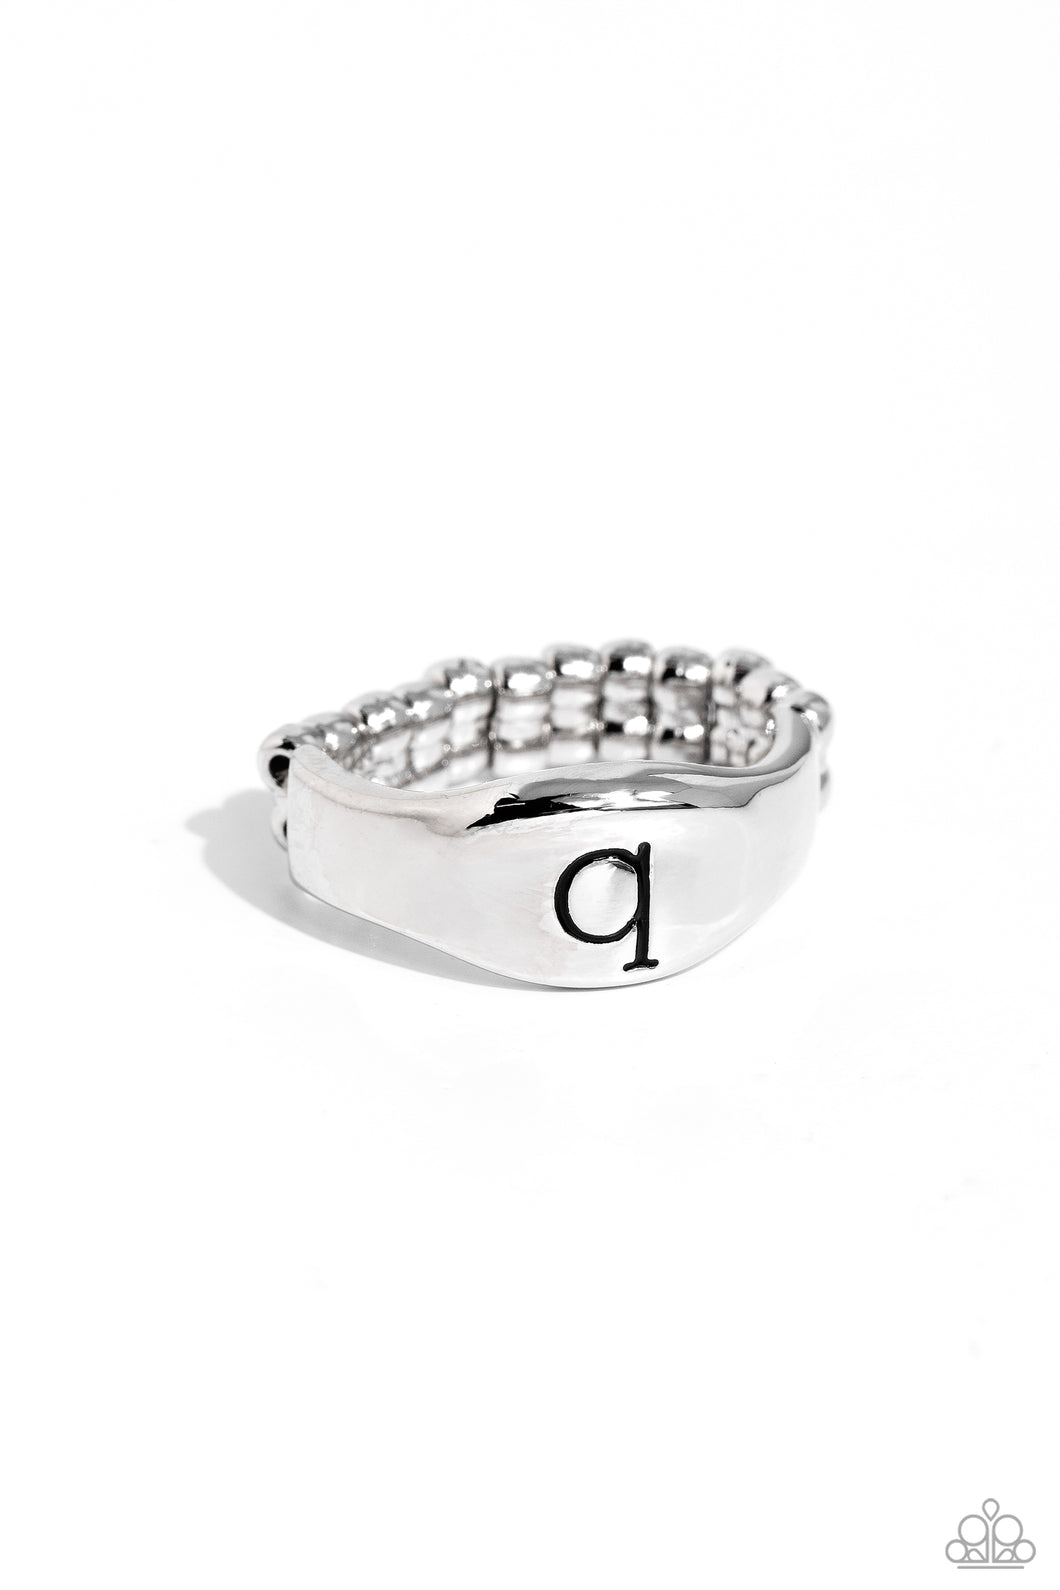 Monogram Memento - Silver - Q Initial Ring